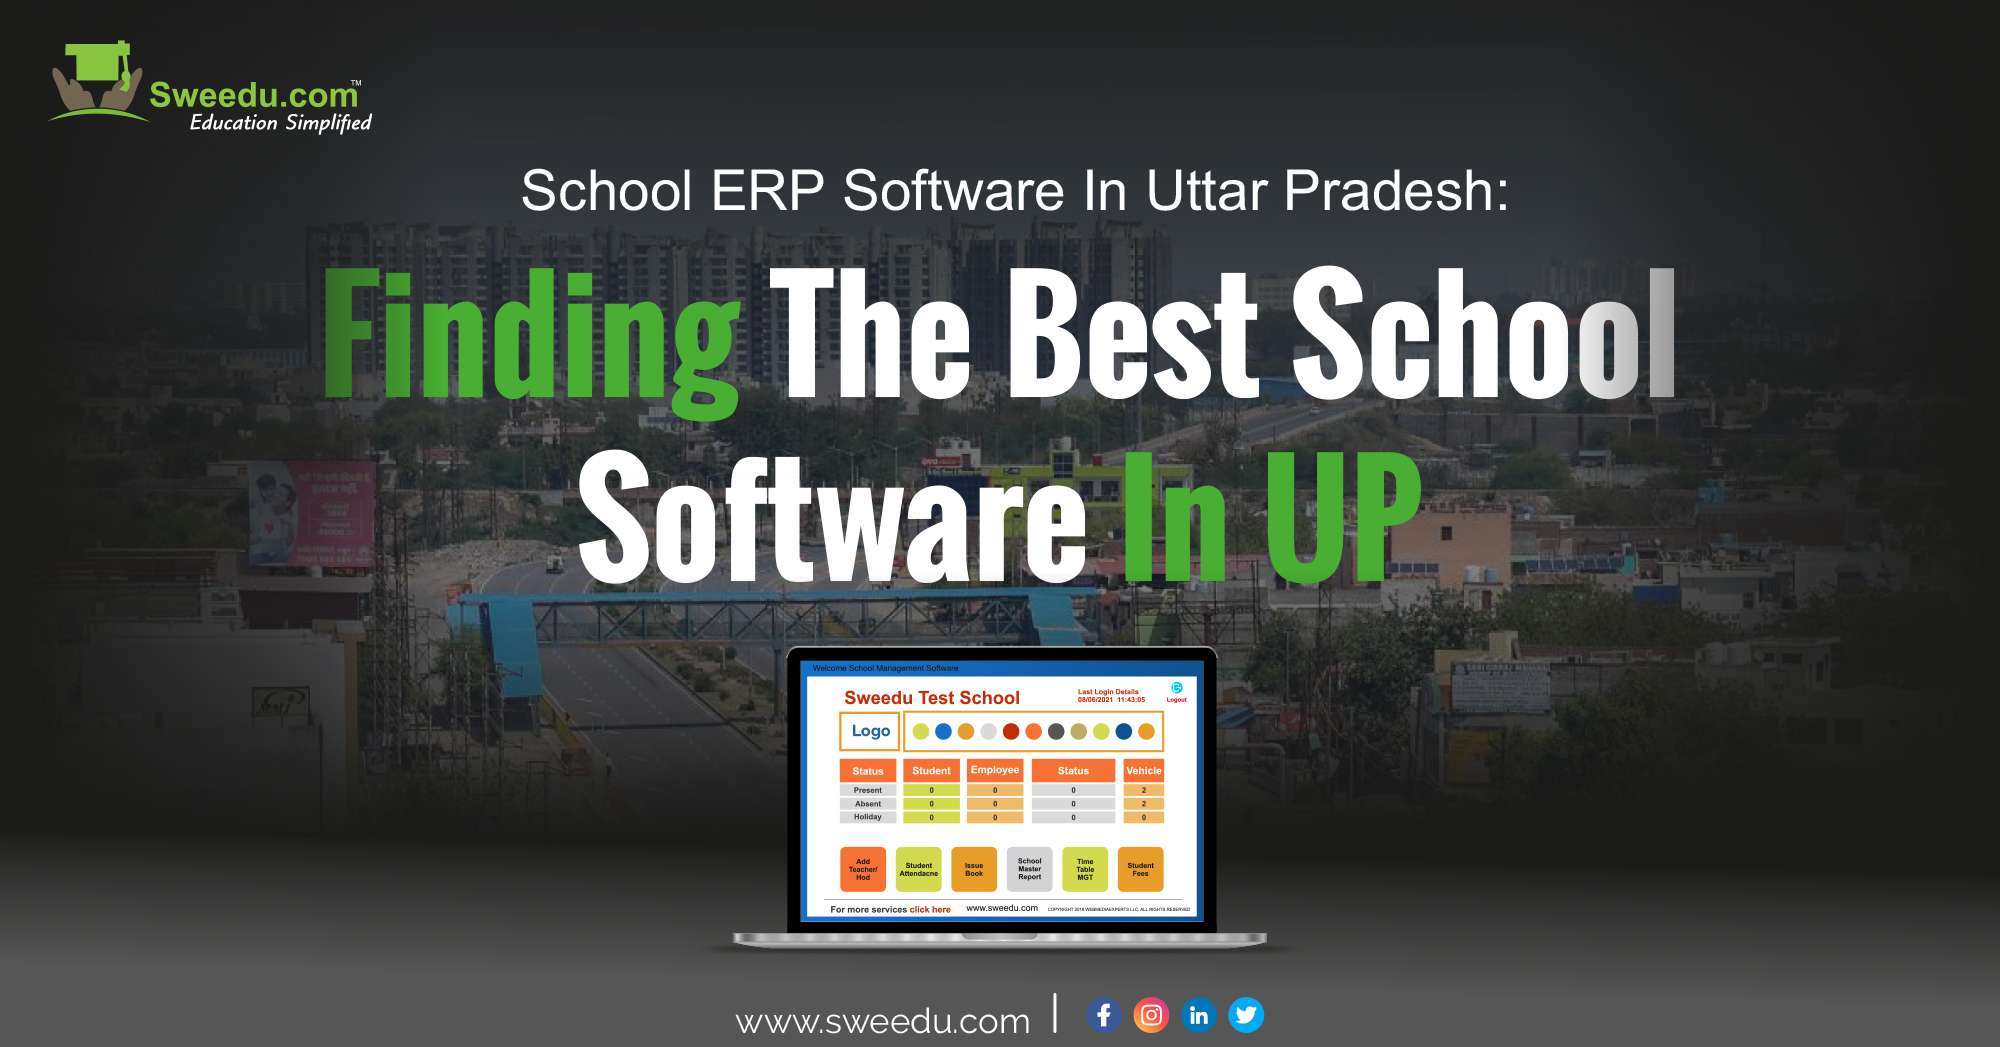 School ERP software in Uttar Pradesh